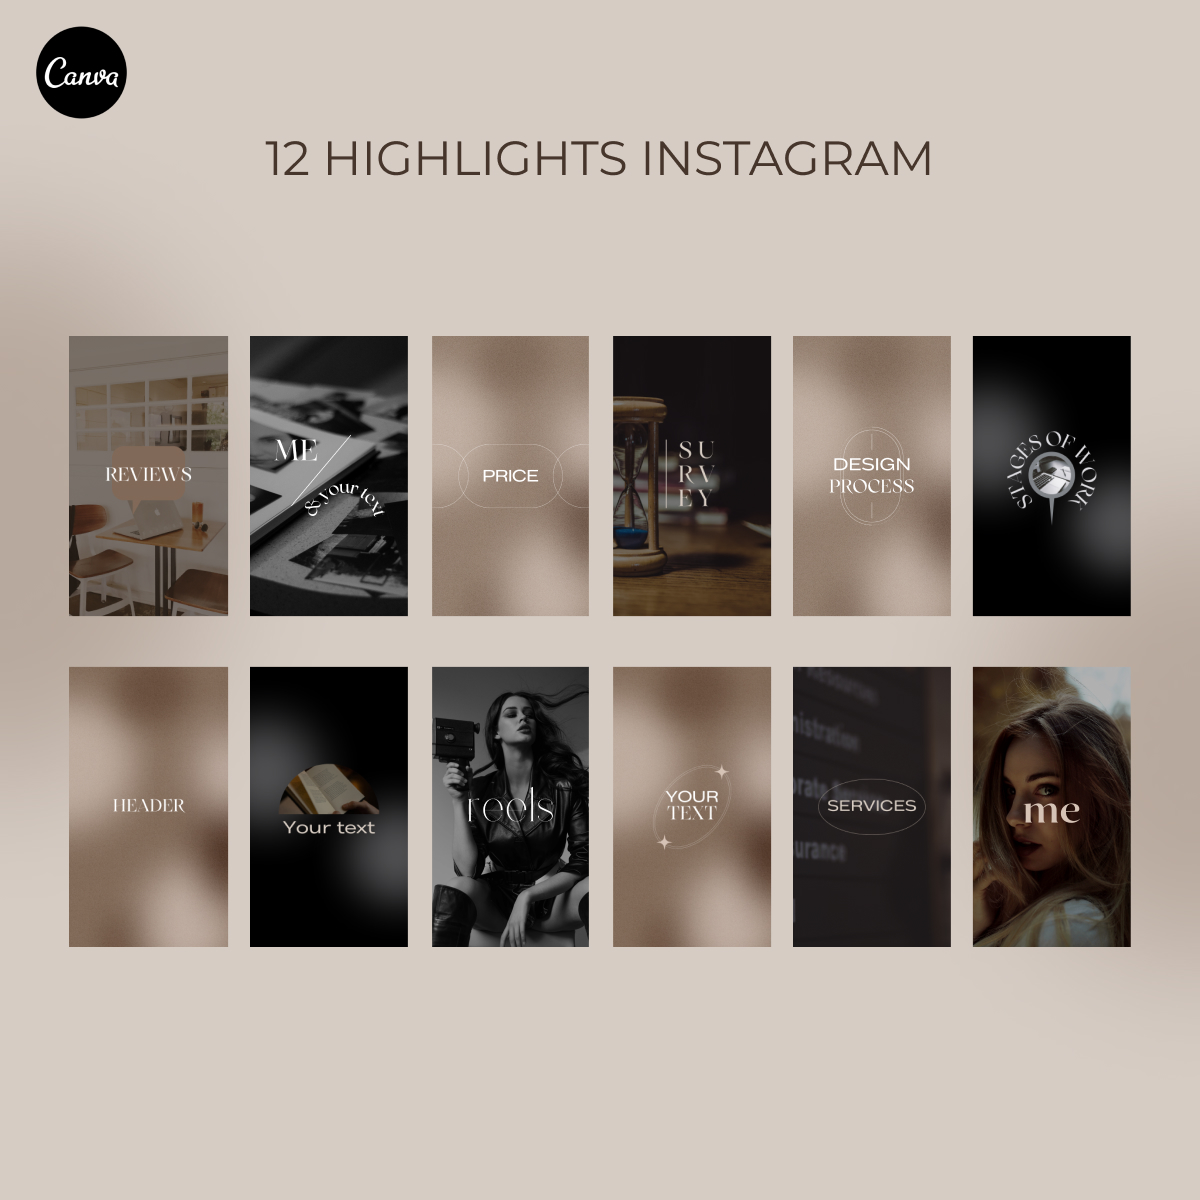 Elegant Highlights Instagram in Canva cover image.